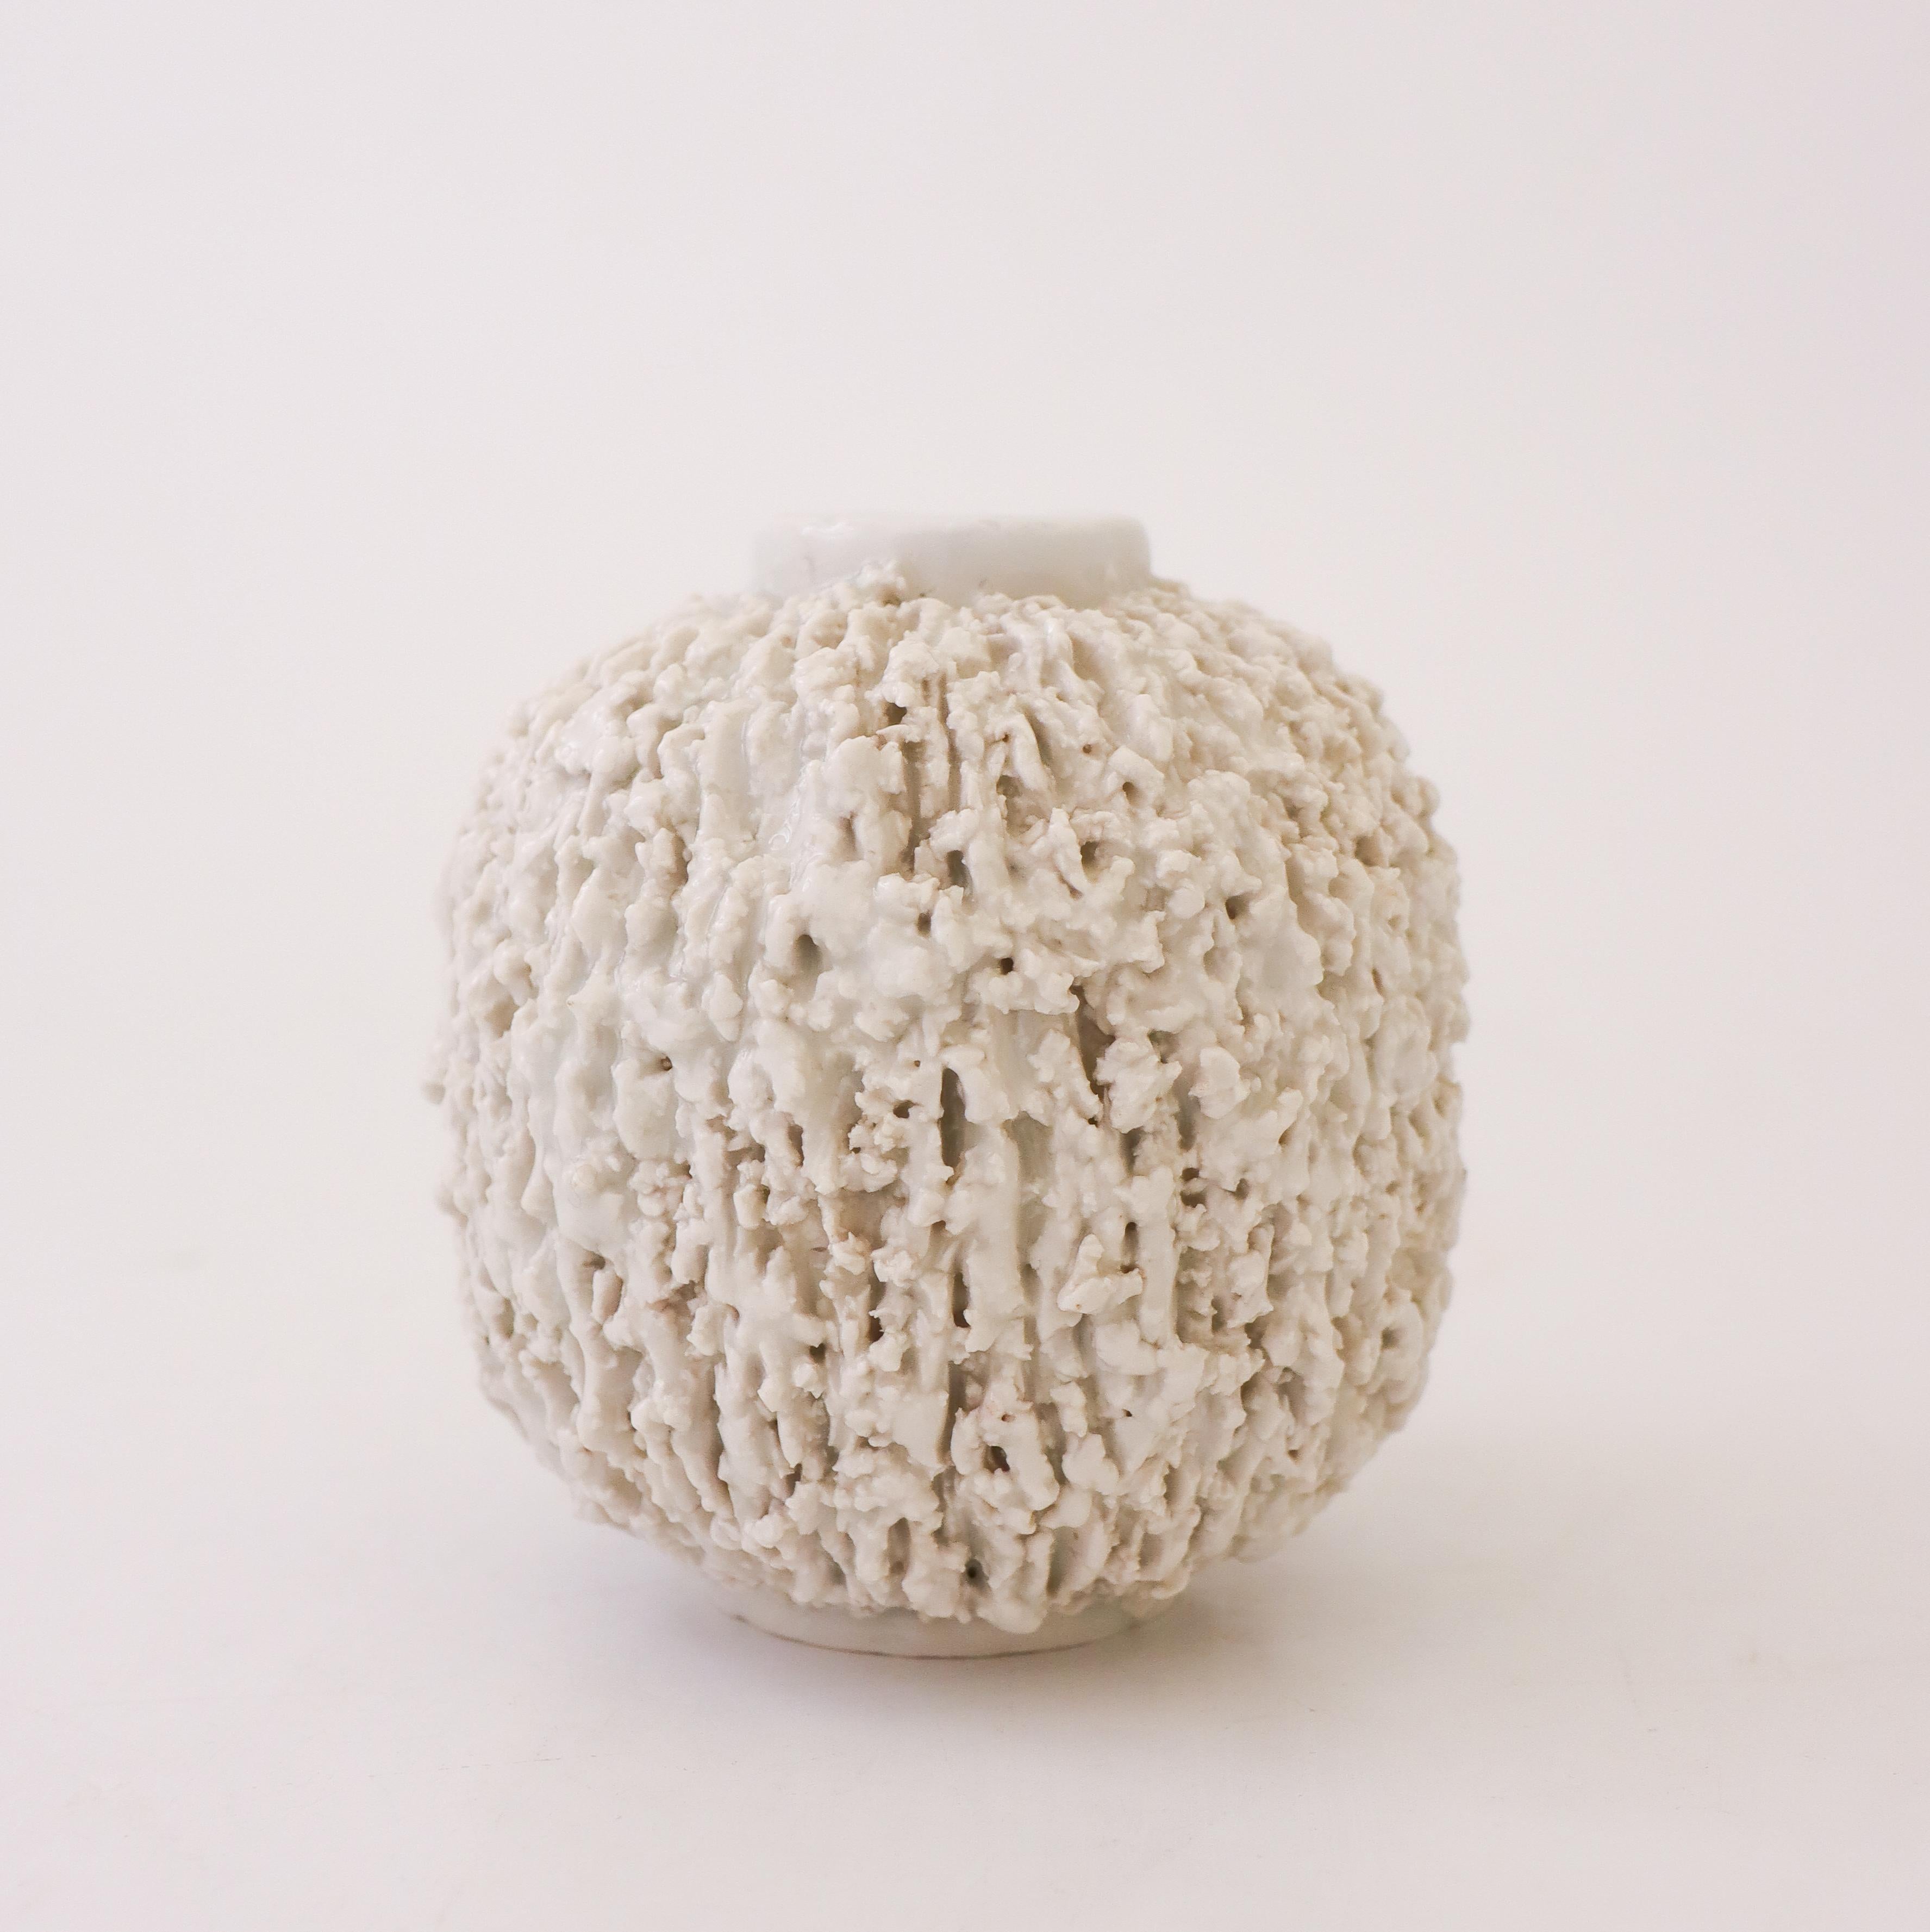 Swedish A White Hedgehog vase - Chamotte - Gunnar Nylund - Rörstrand For Sale